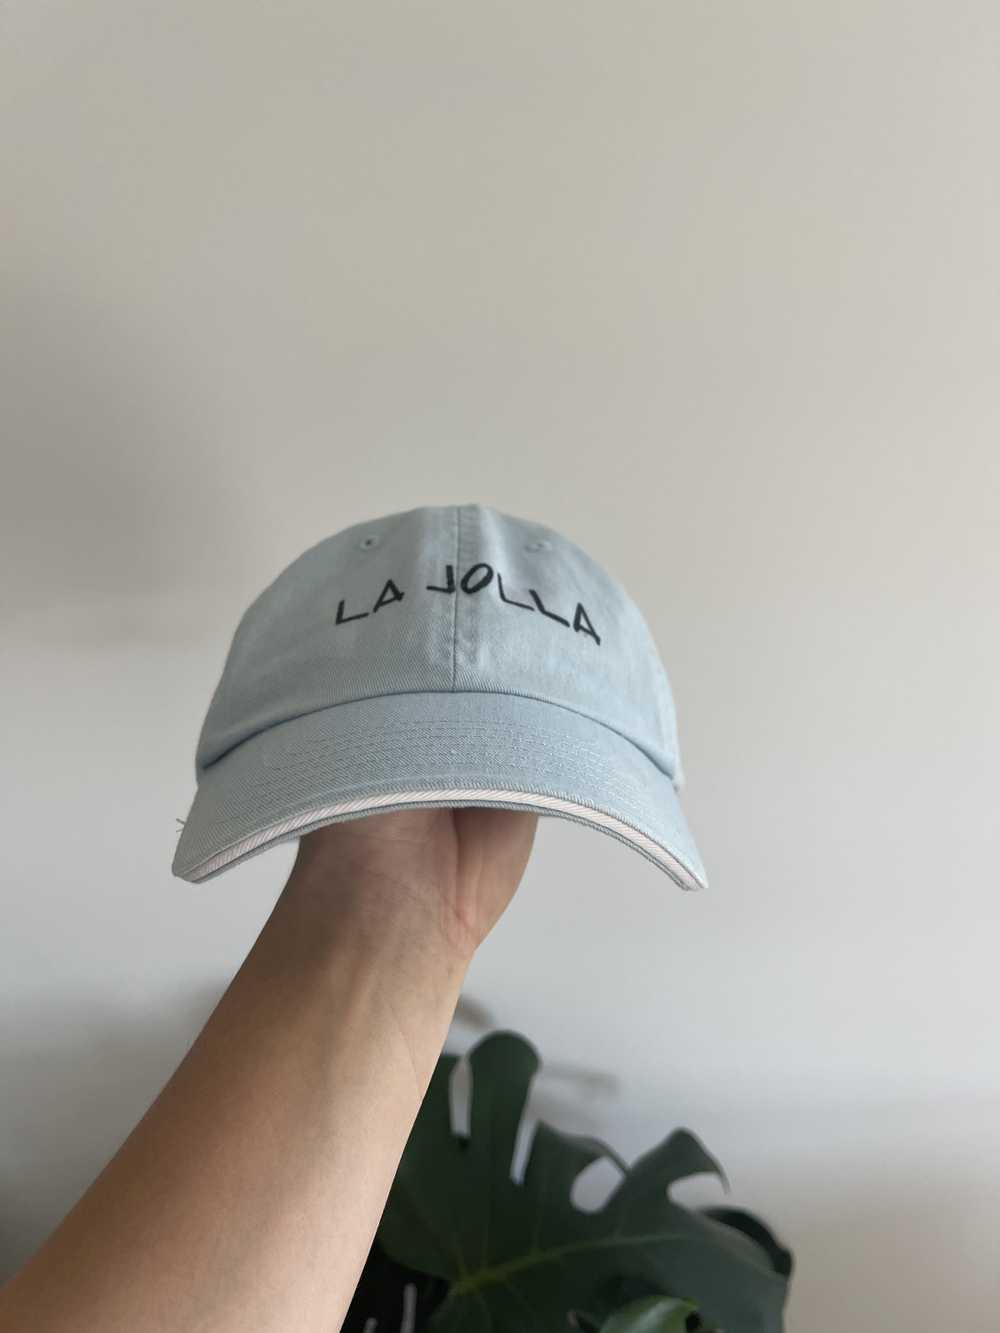 Vintage 1990s La Jolla California Beach Hat Cap - image 2